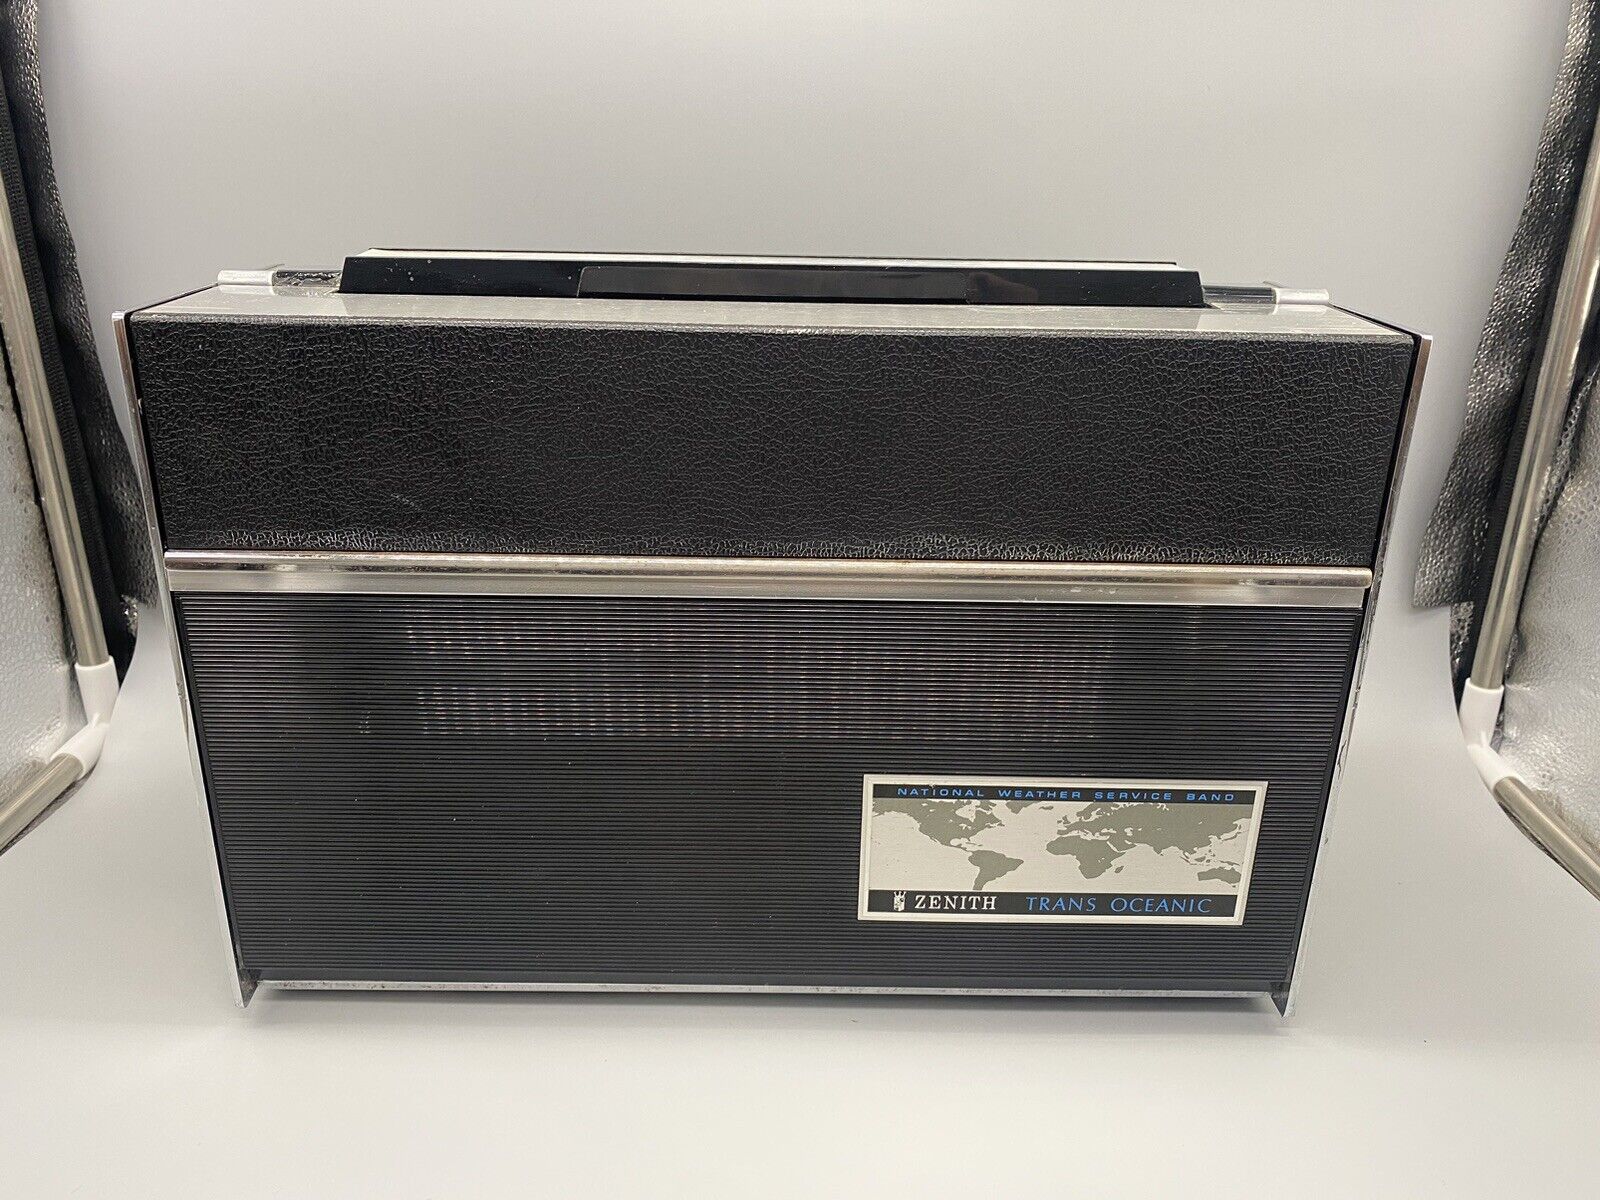 VTG Zenith Trans Oceanic RD7000Y 11 Band Transistor Radio w/Log Book TESTED